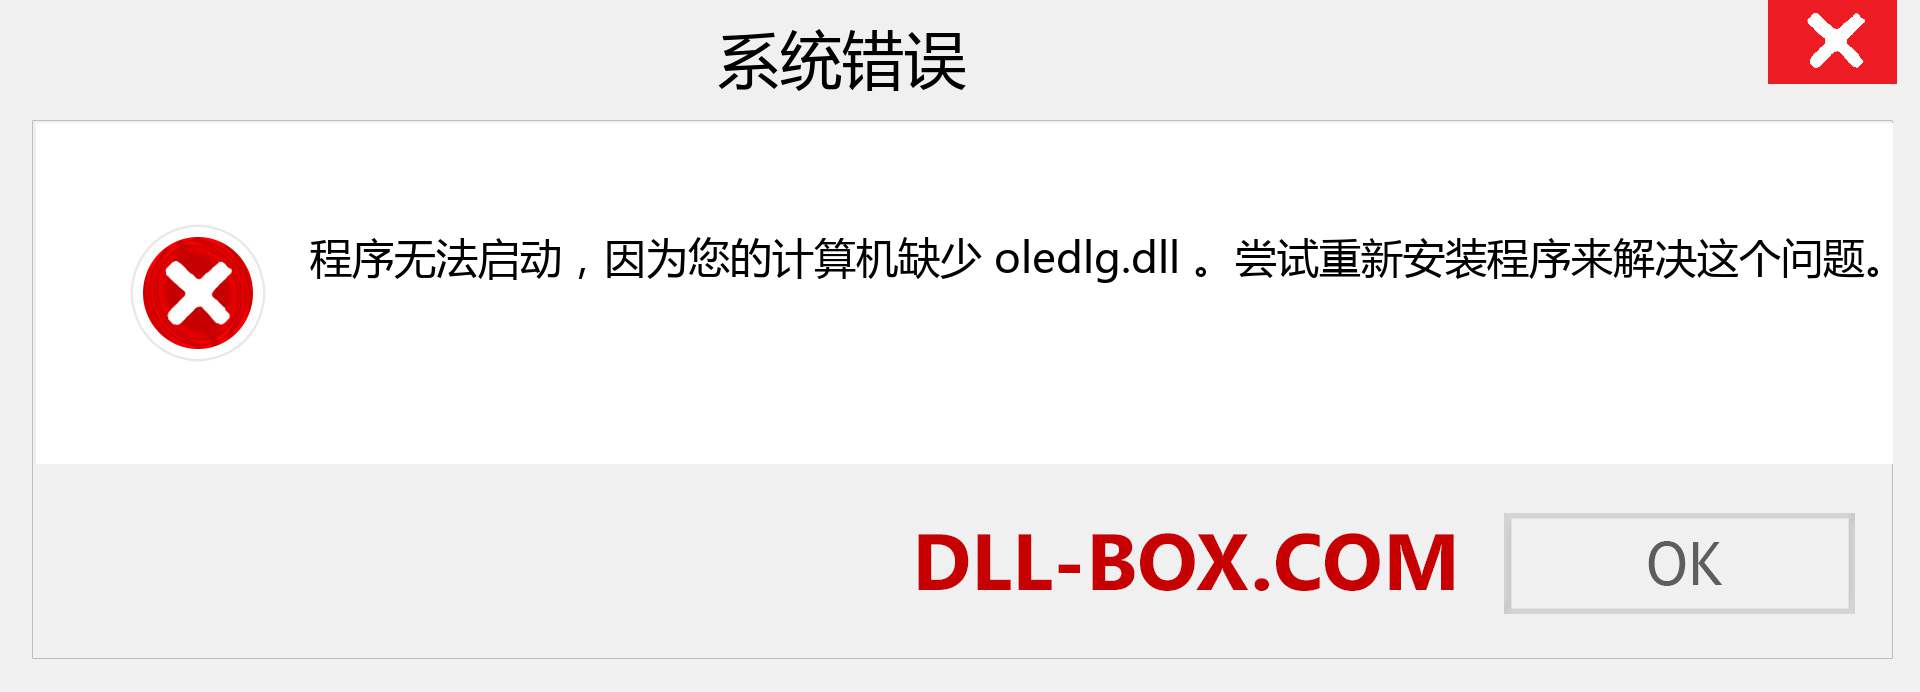 oledlg.dll 文件丢失？。 适用于 Windows 7、8、10 的下载 - 修复 Windows、照片、图像上的 oledlg dll 丢失错误